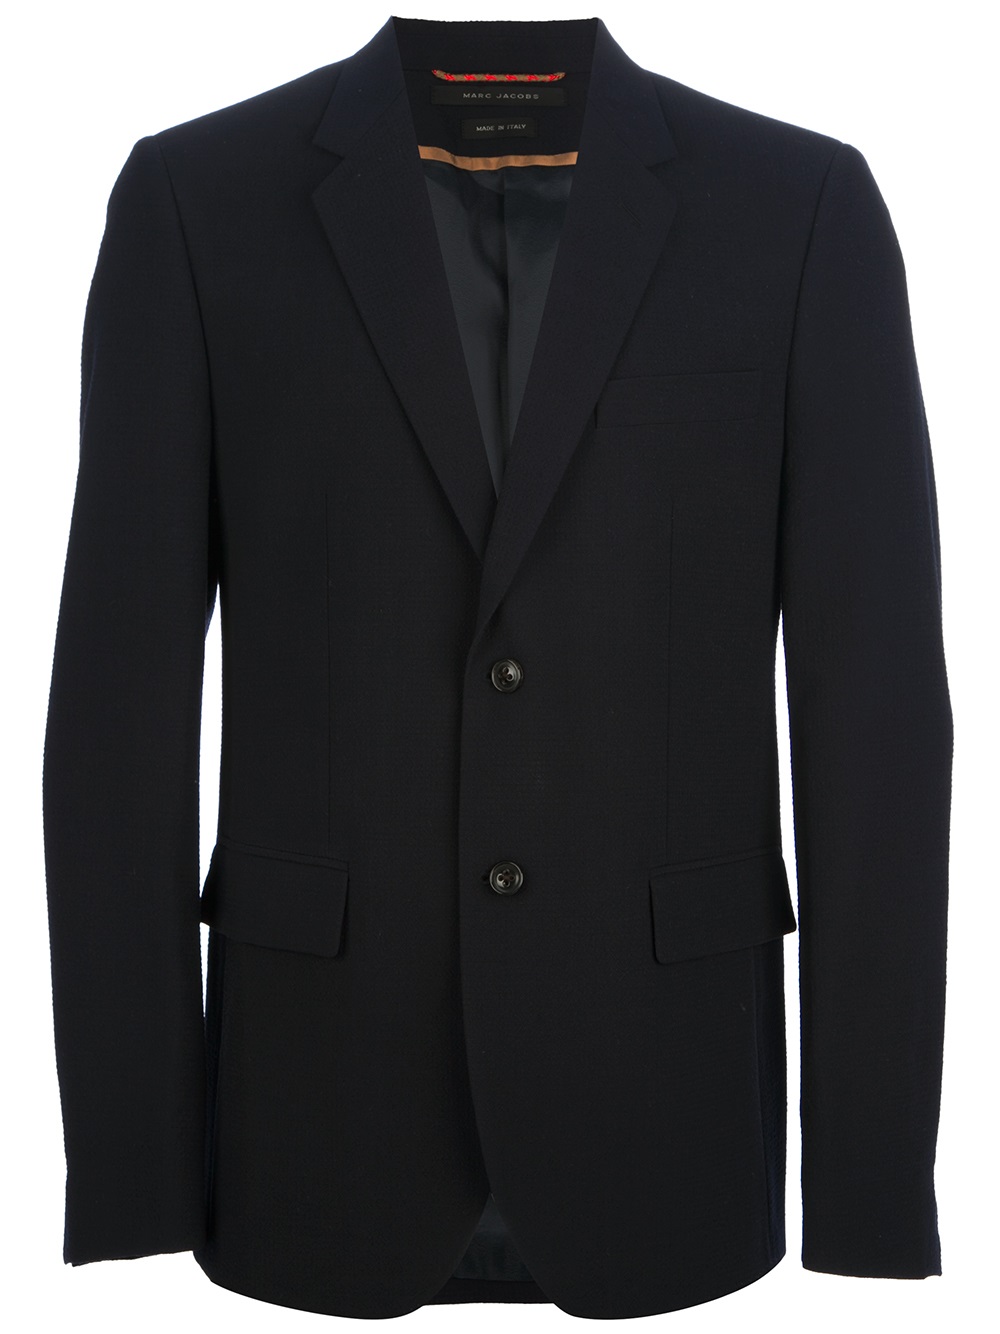 Lyst - Marc Jacobs Wool Suit in Black for Men